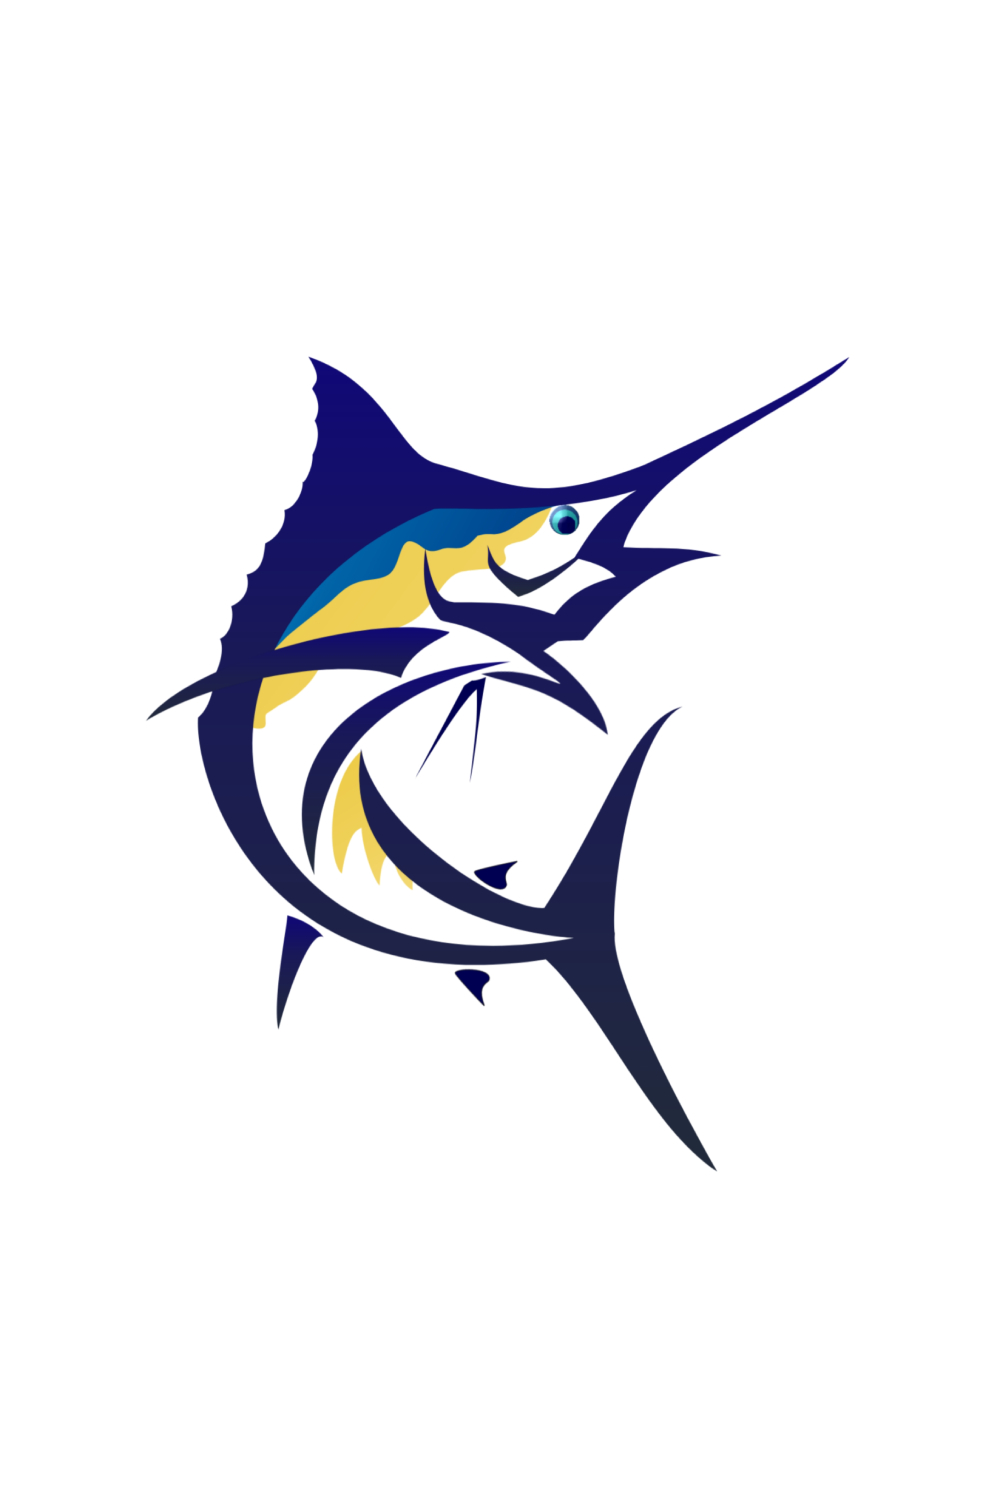 Marlin Fish Logo Design pinterest image.